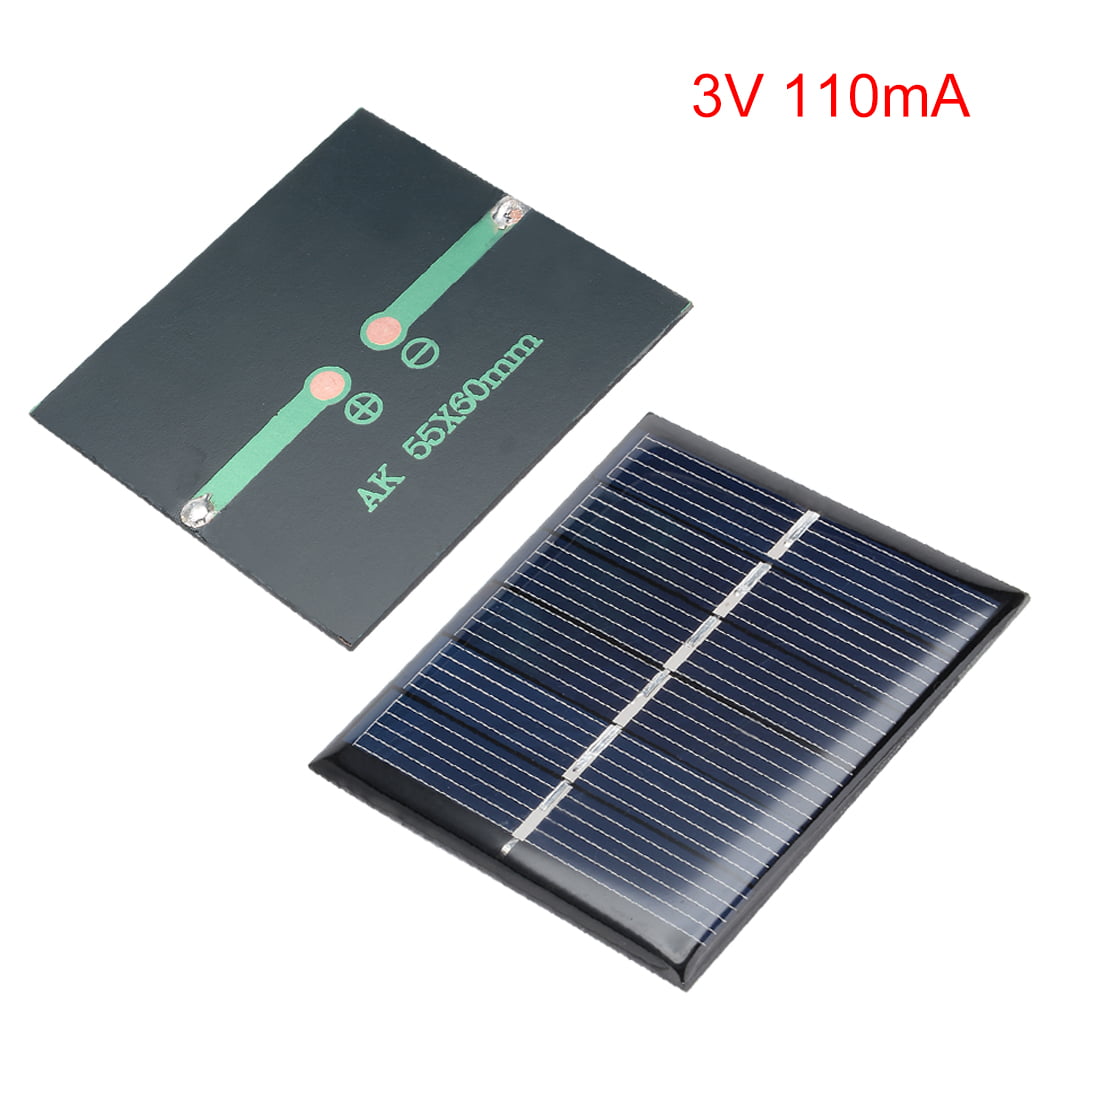 Mini Solar Panel epoxy encapsulated virtually indestructible .12 watt 2V-60 mA 